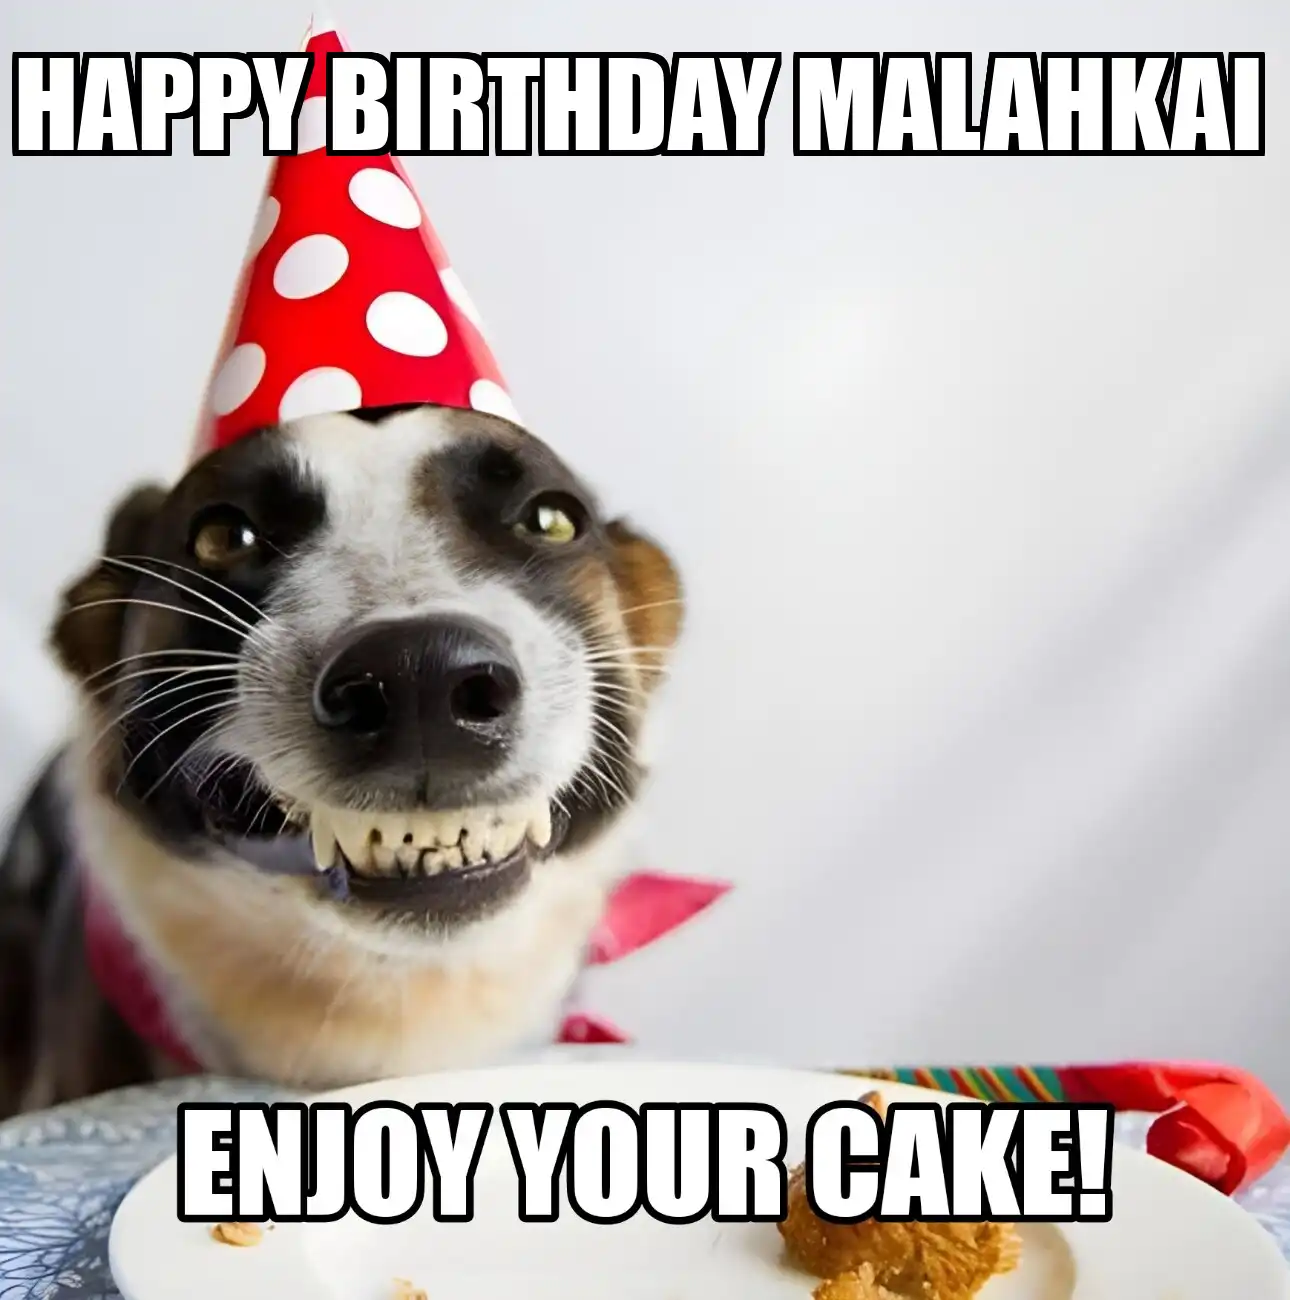 Happy Birthday Malahkai Enjoy Your Cake Dog Meme